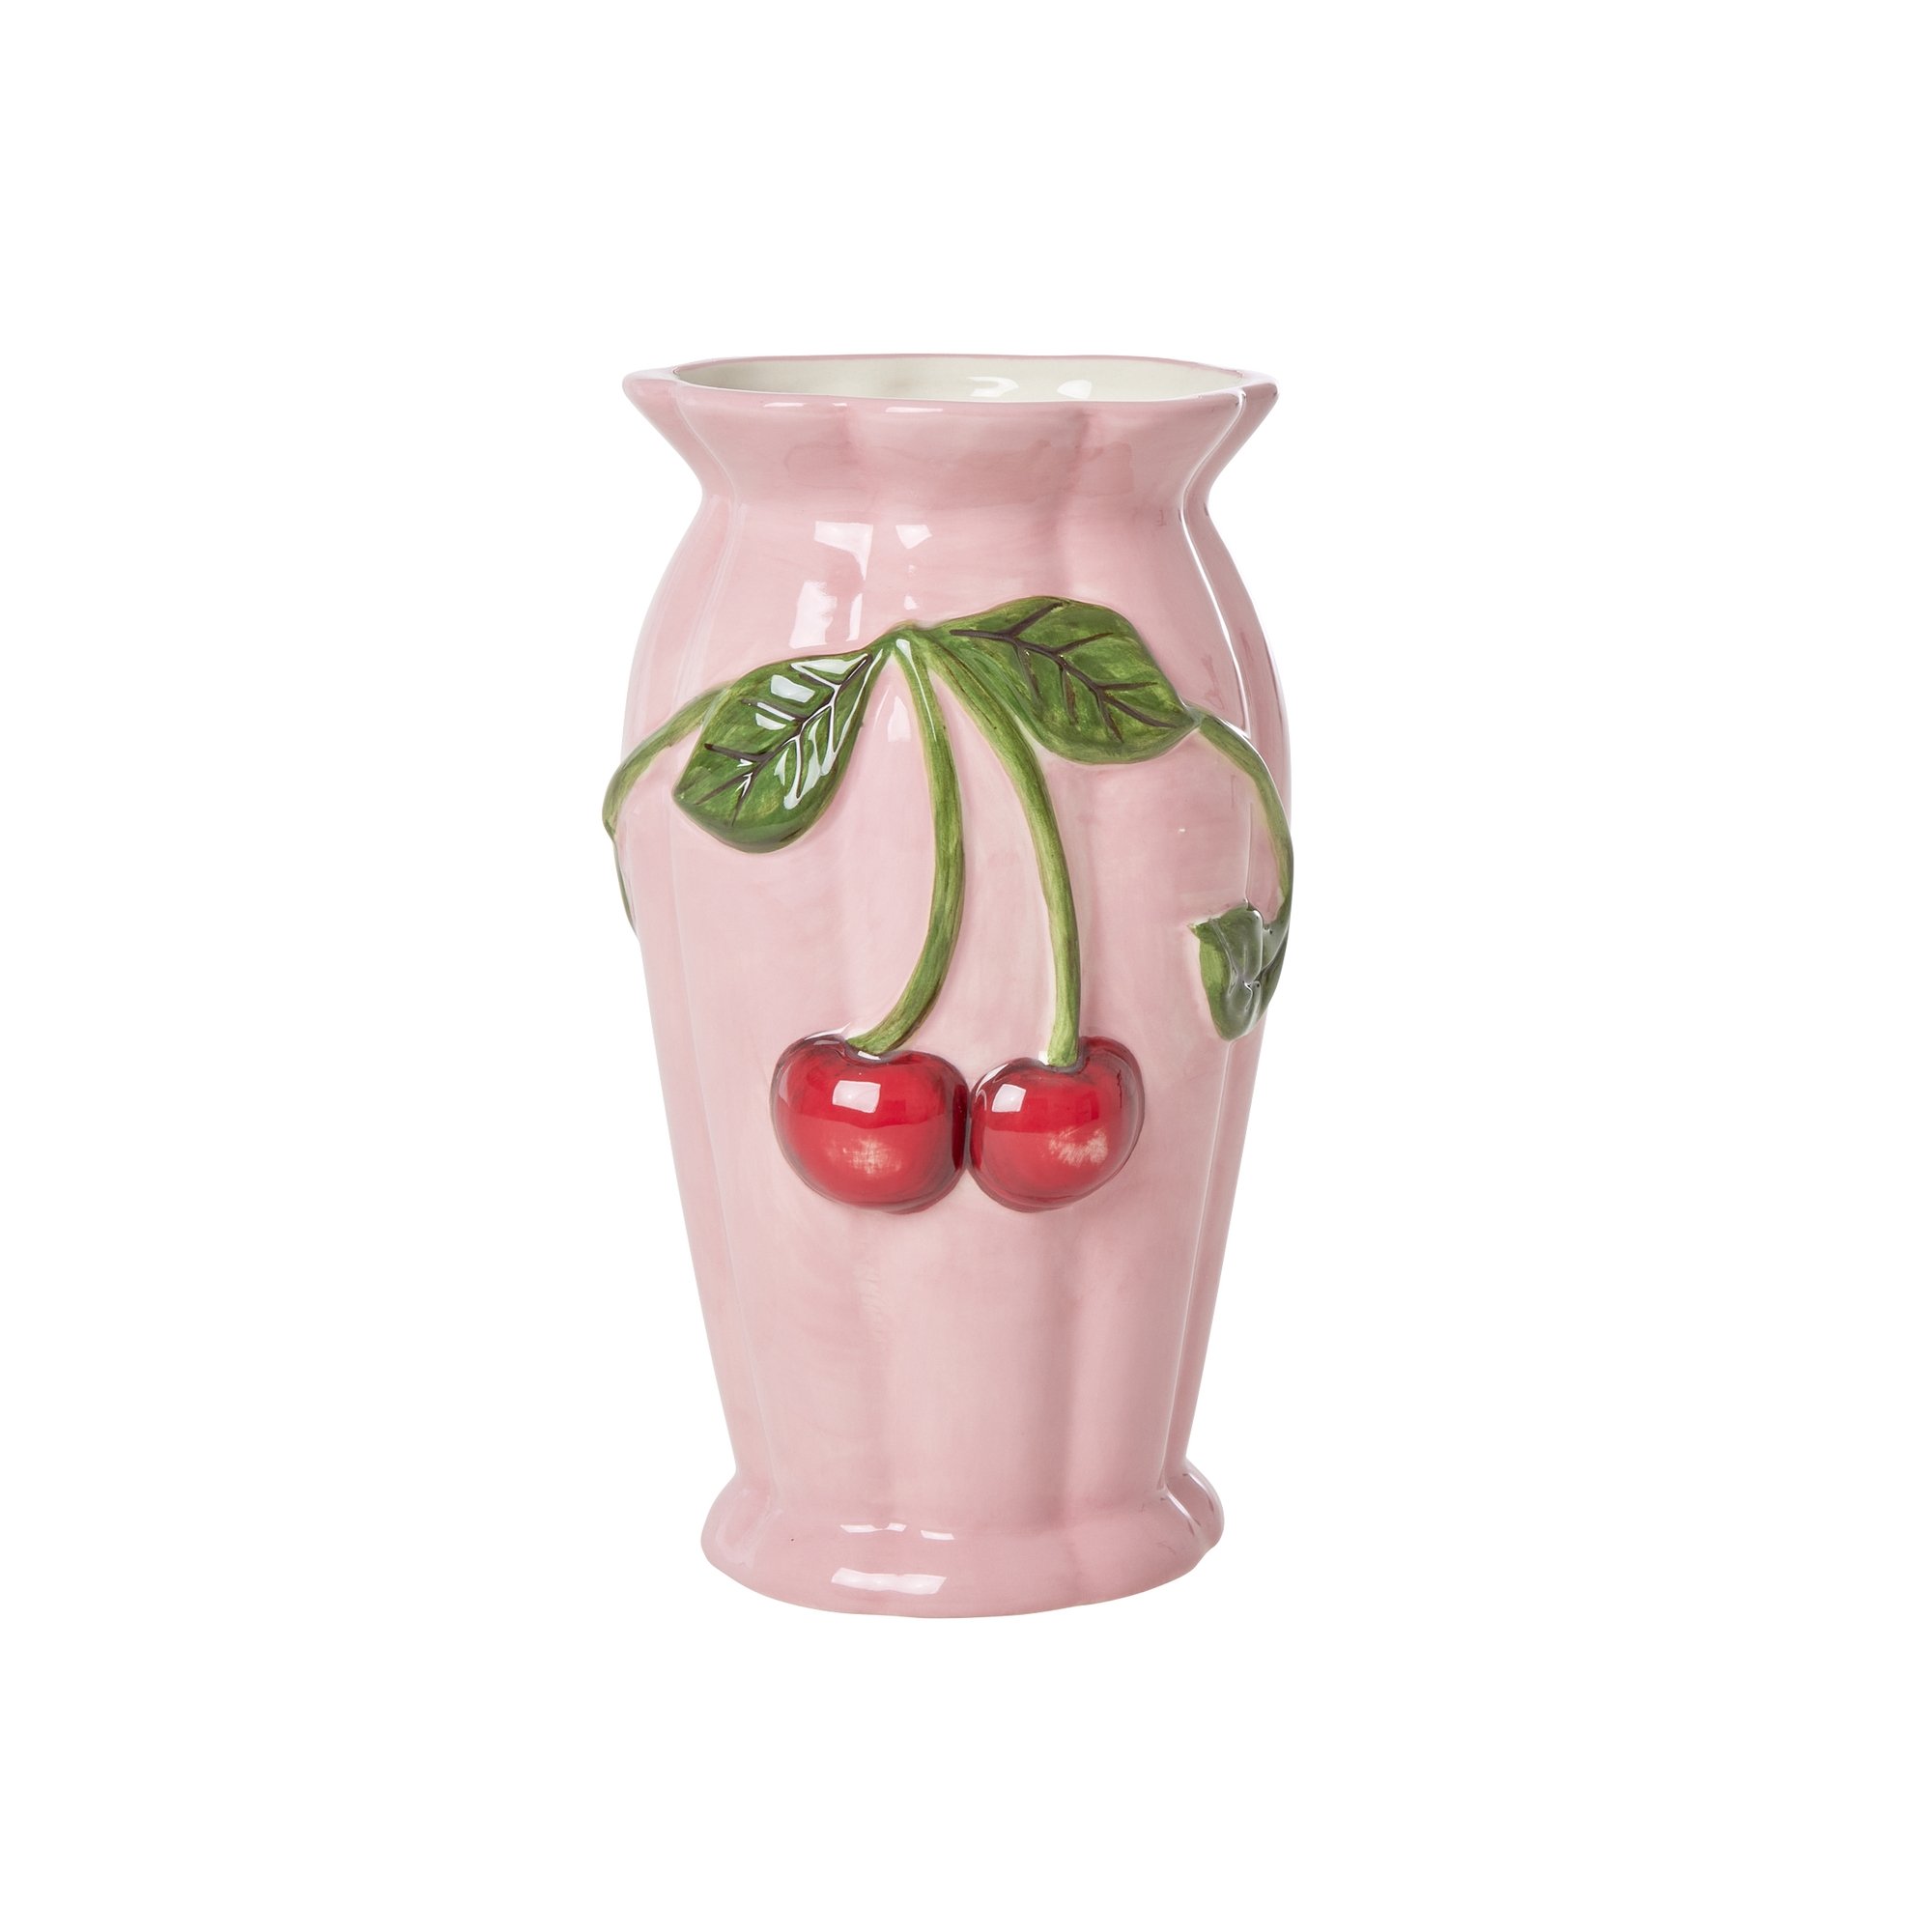 5: Rice - Keramisk Vase Med Kirsebærskulptur - Pink